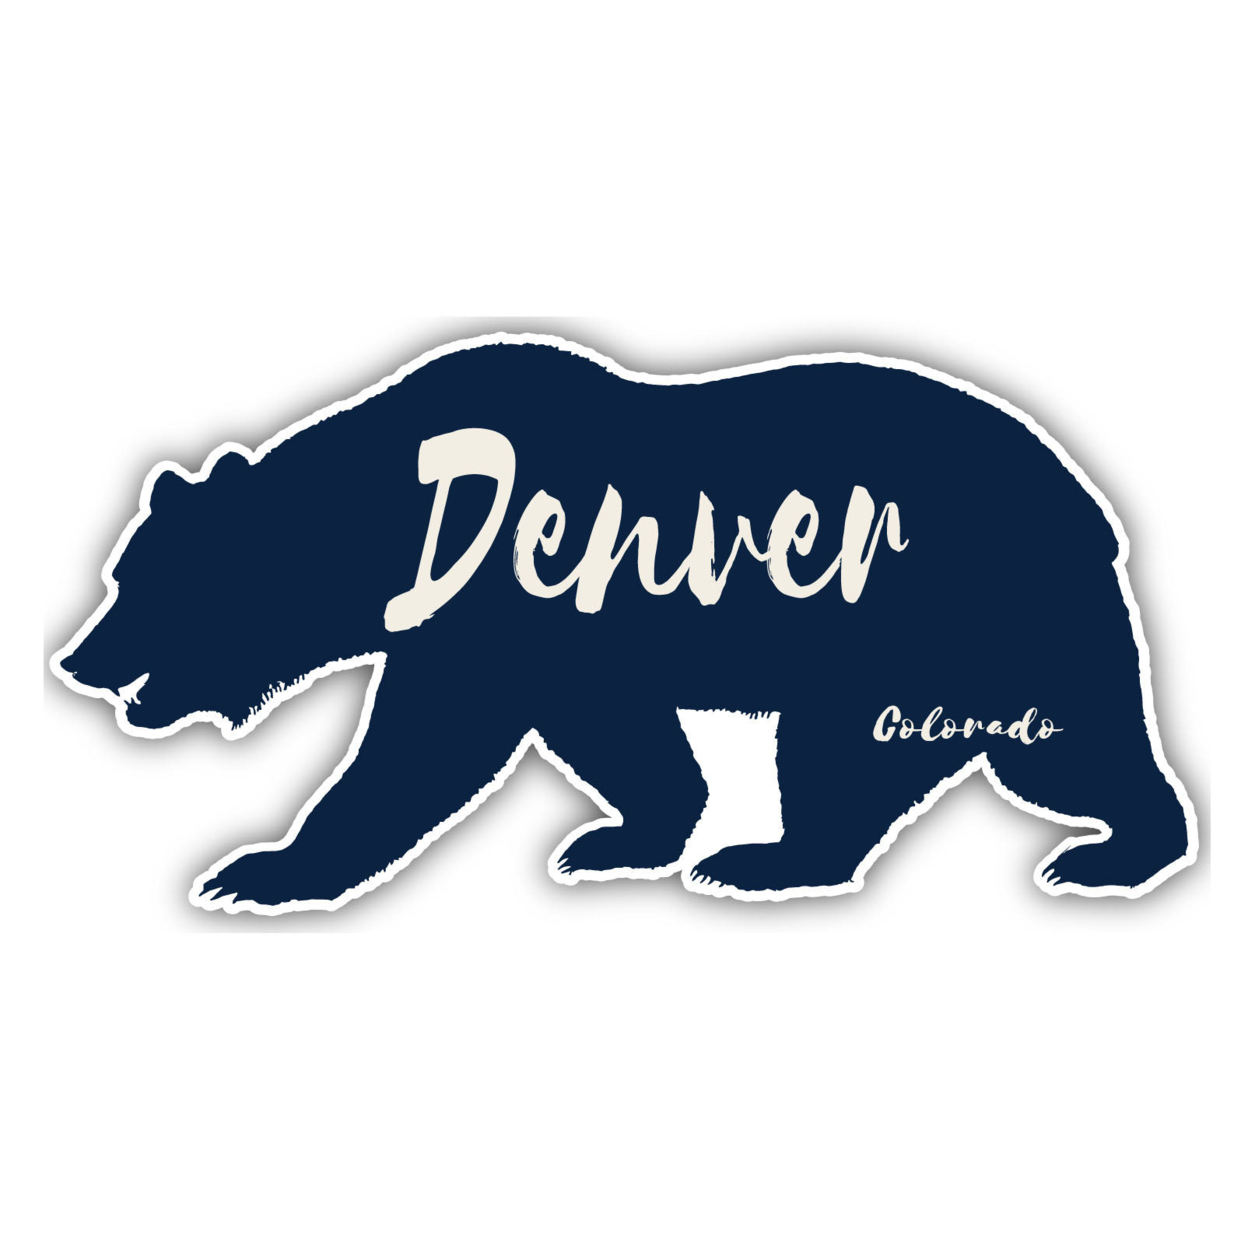 Denver Colorado Souvenir Decorative Stickers (Choose Theme And Size) - Single Unit, 4-Inch, Camp Life